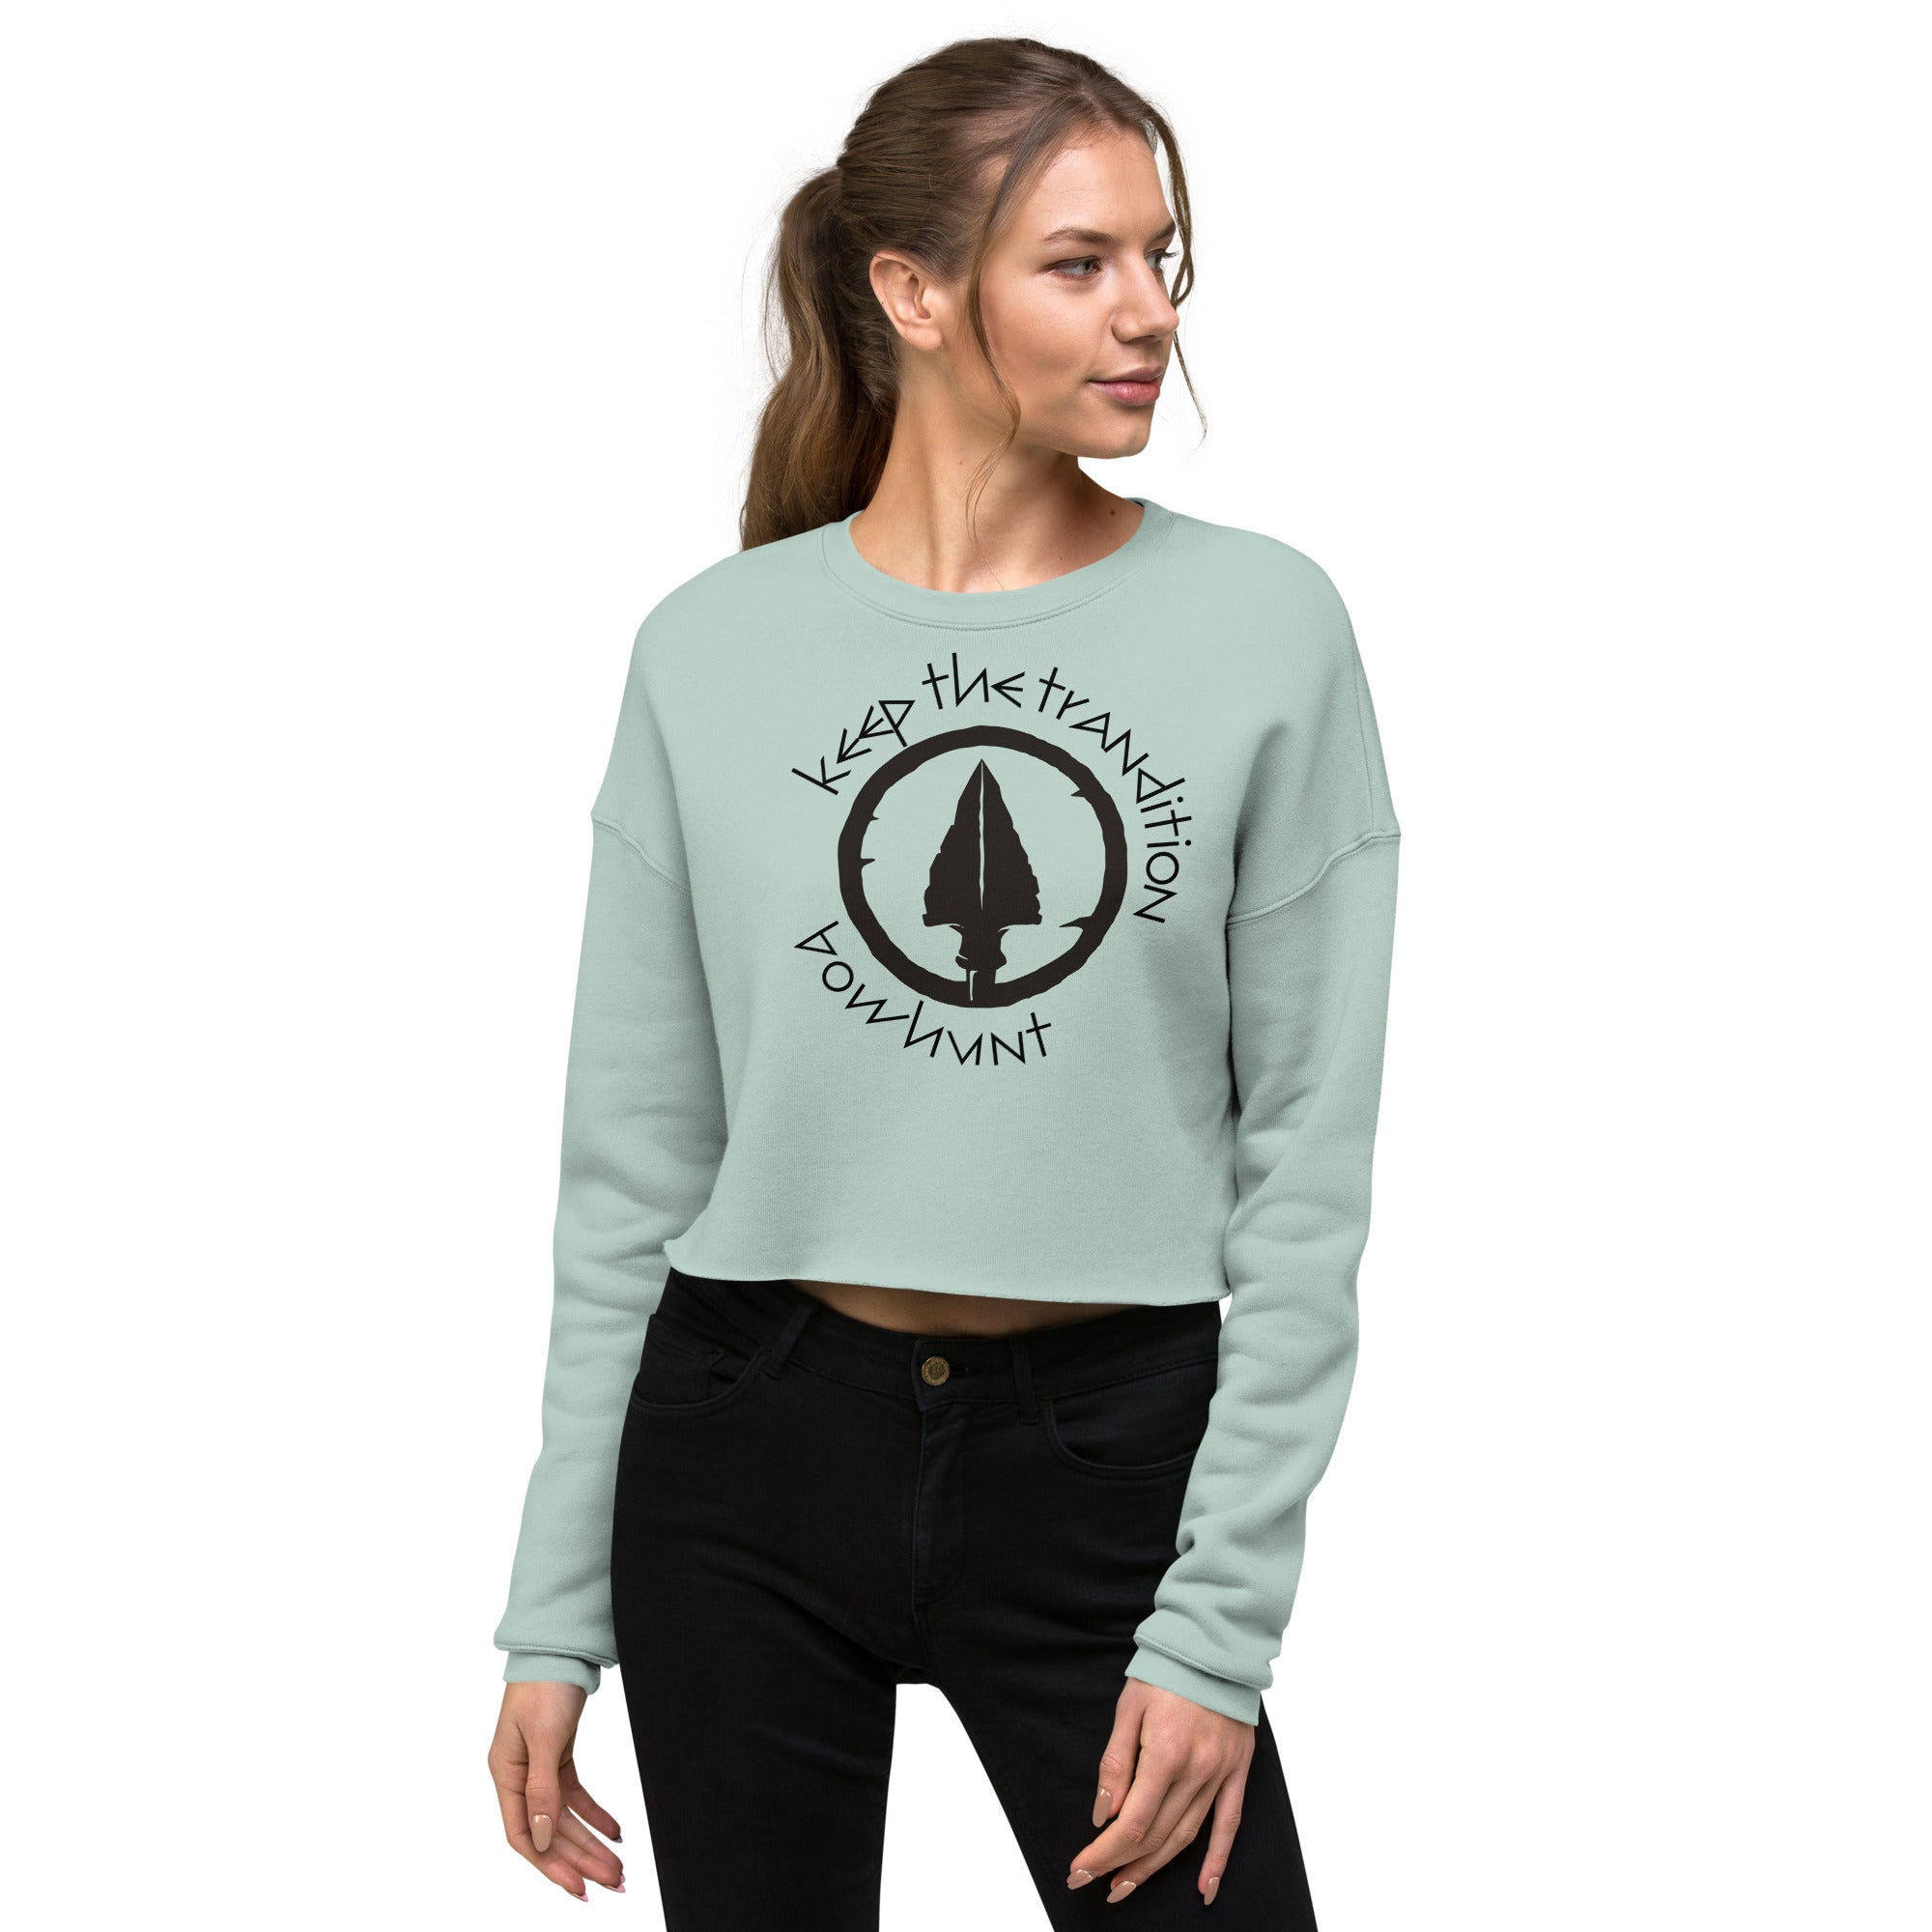 Keep The Tradition Women's Crop Sweatshirt - Bow Hunt